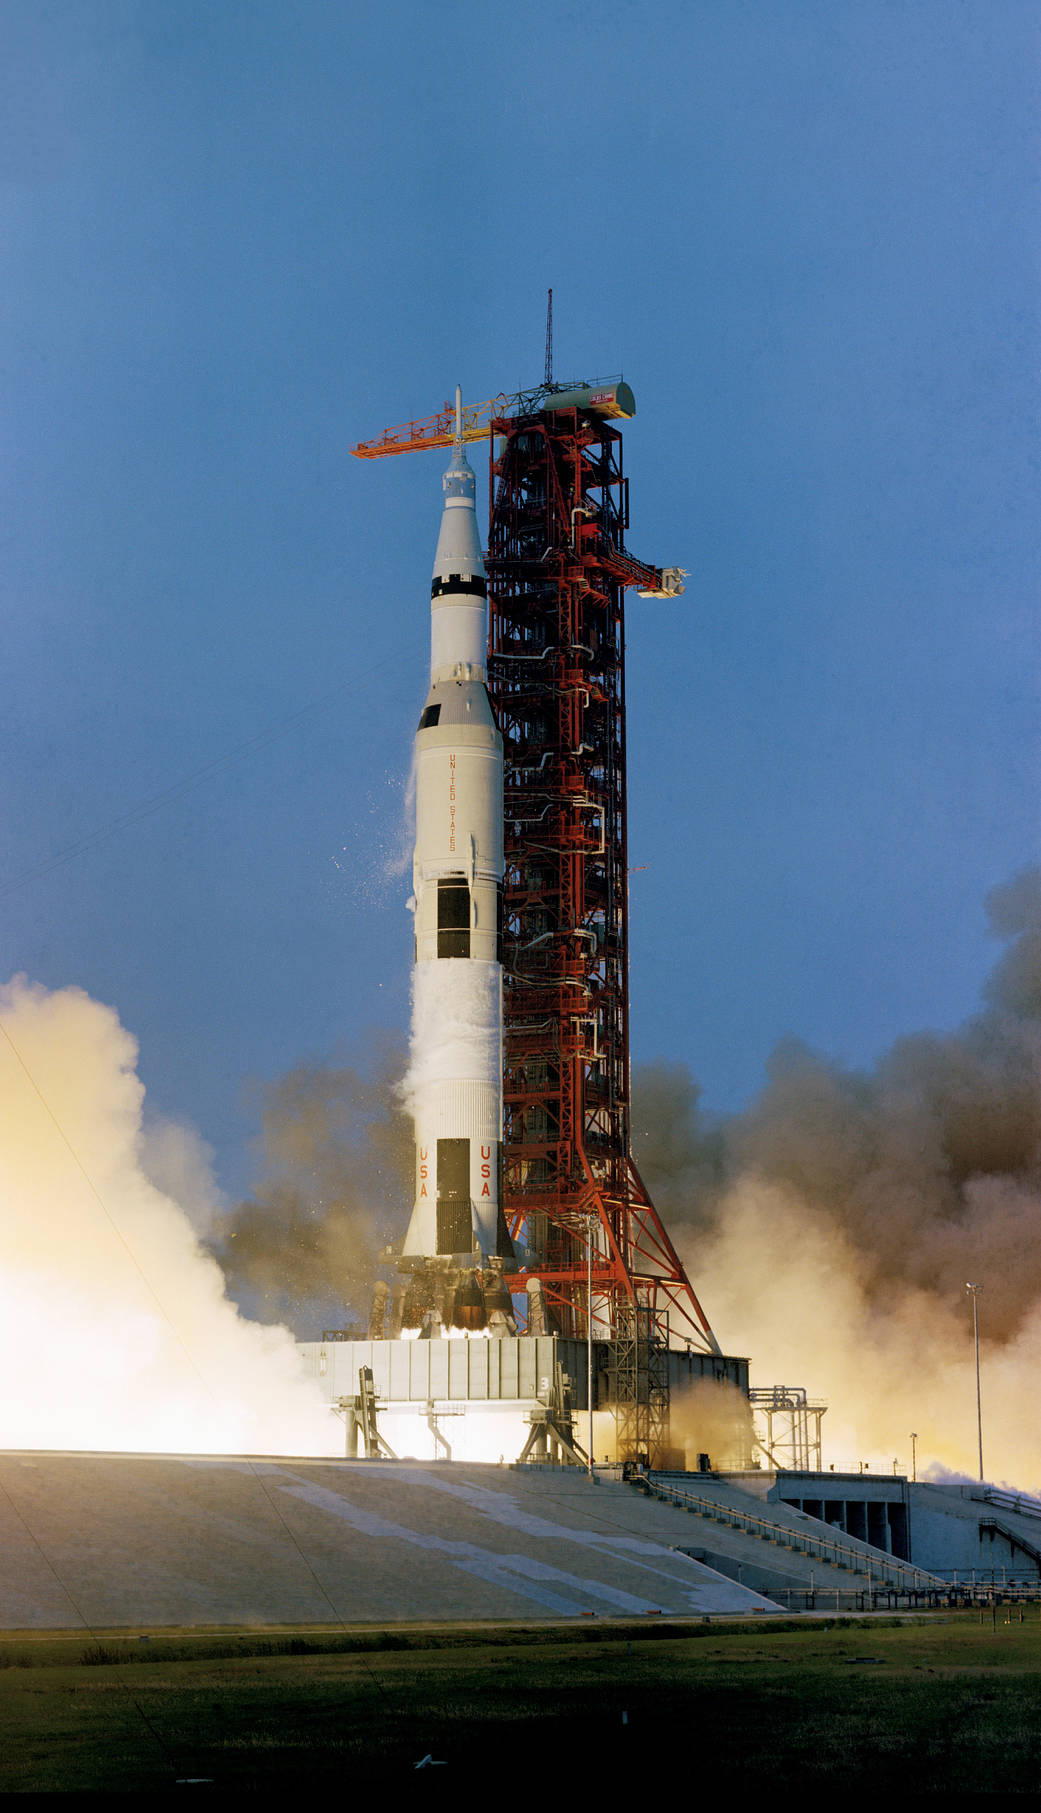 Apollo 13 rocket launching